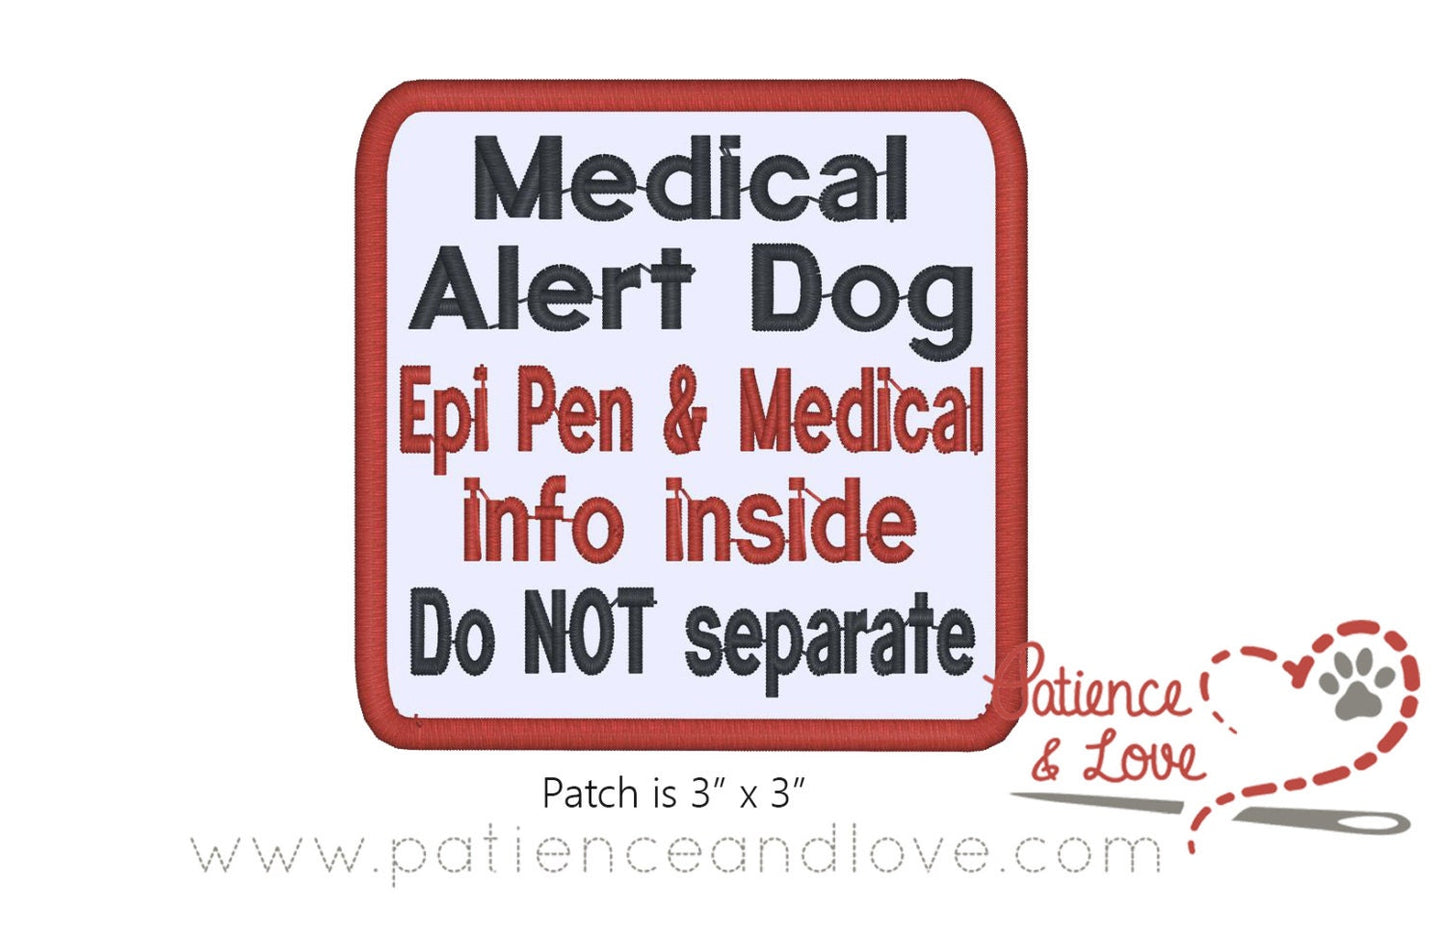 Medical Alert Dog - epi pen and medical info inside - Do not separate, 3 x 3", square patch